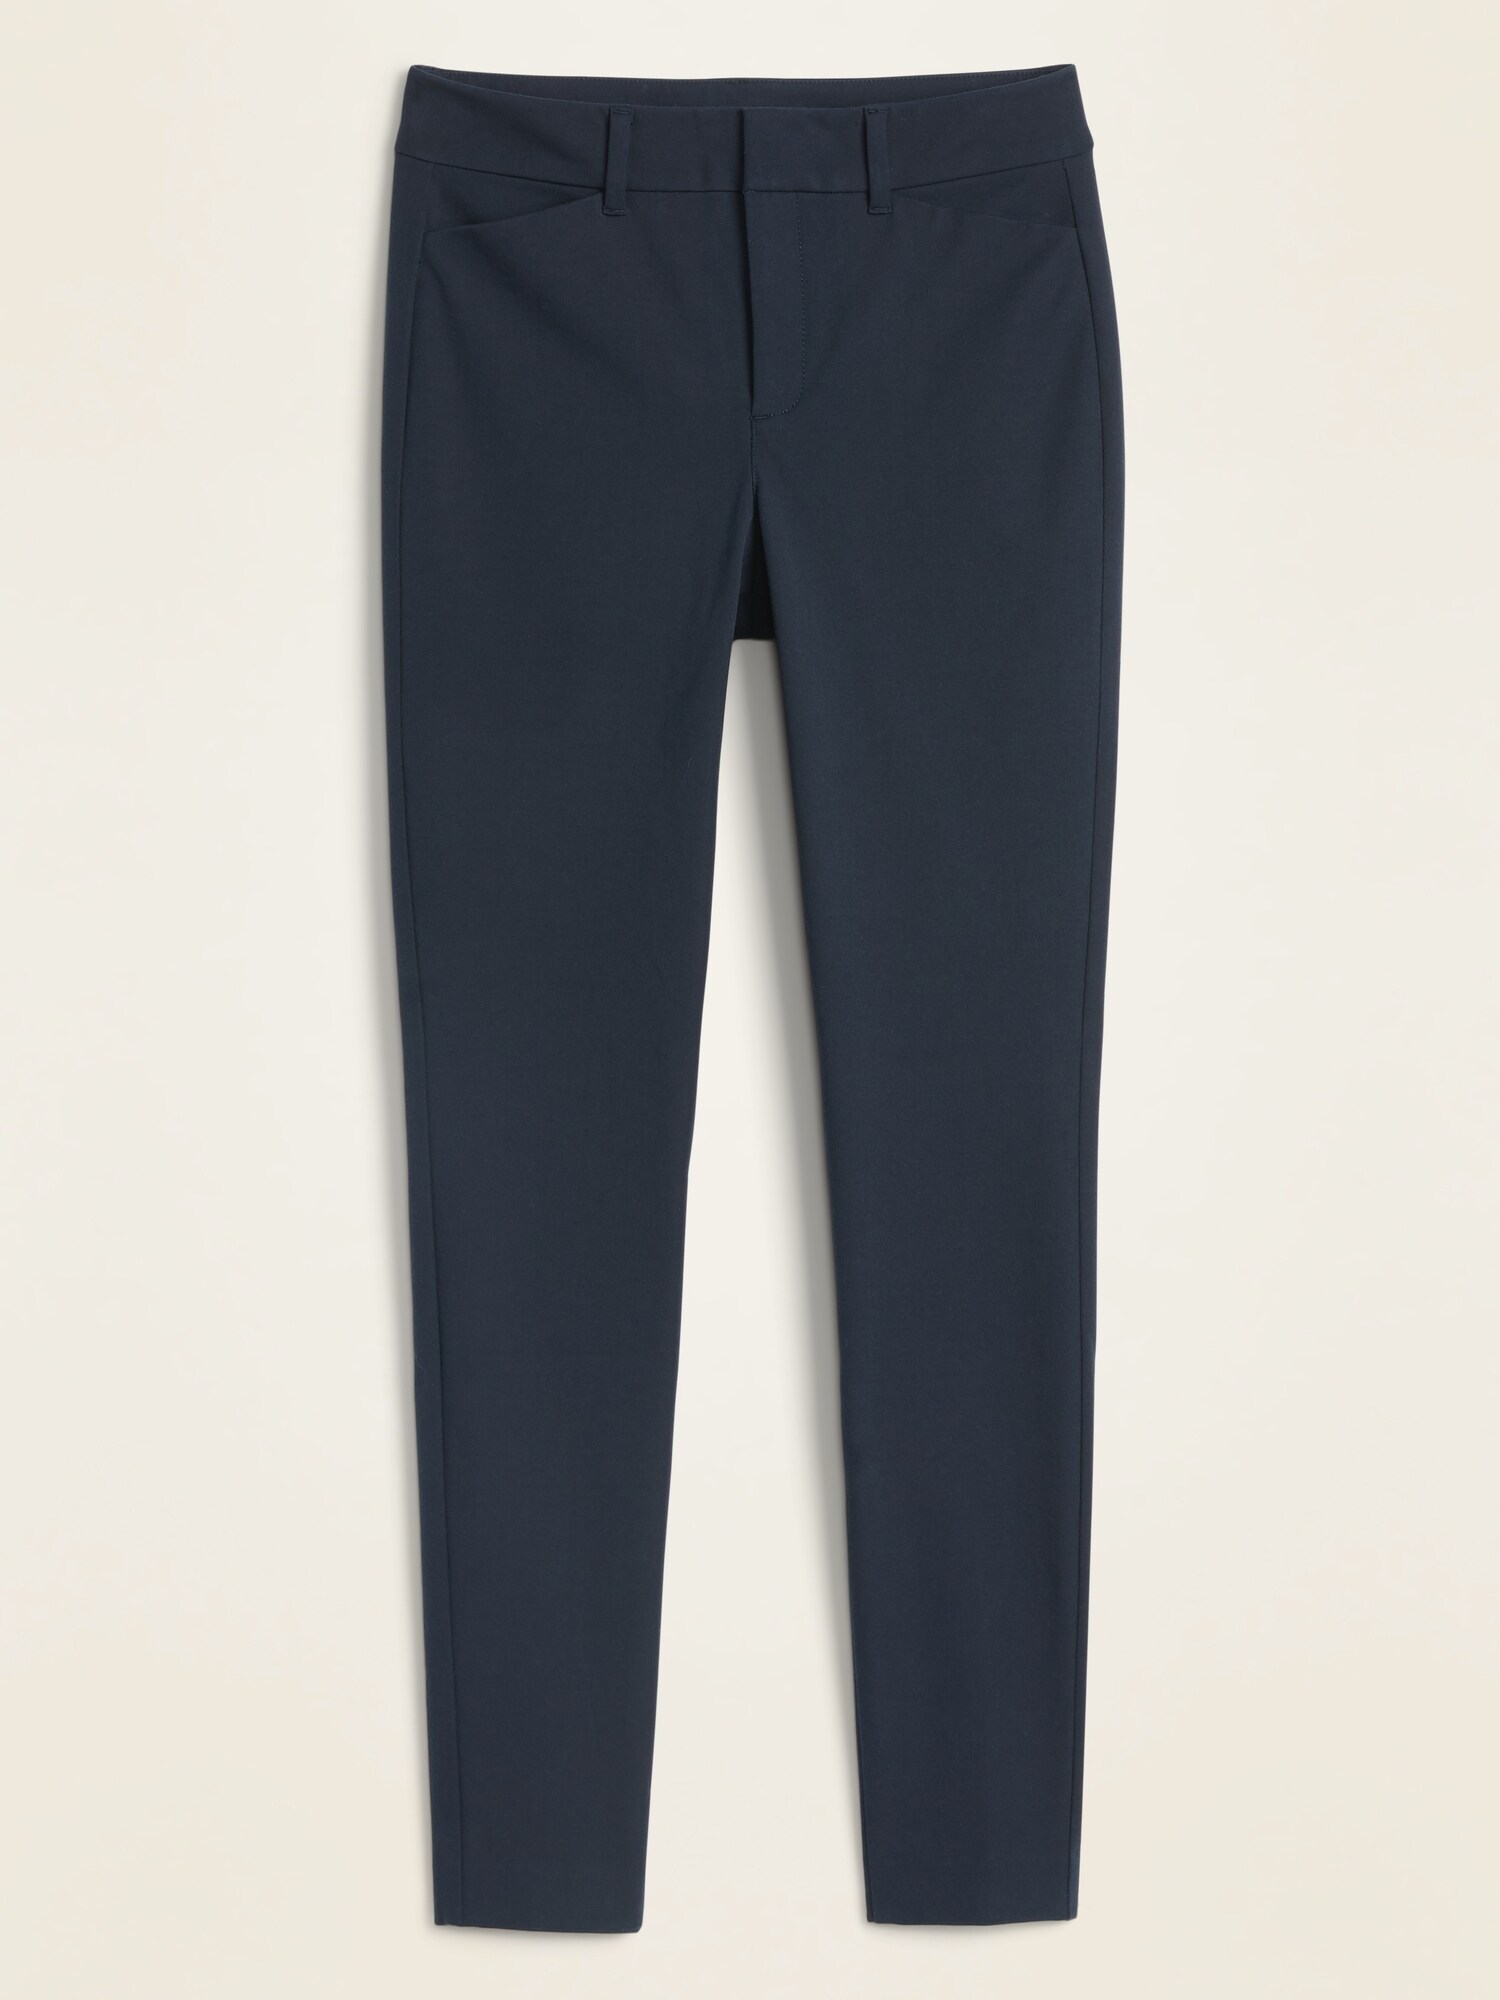 High-Waisted Pixie Full-Length Pants for Women | Old Navy